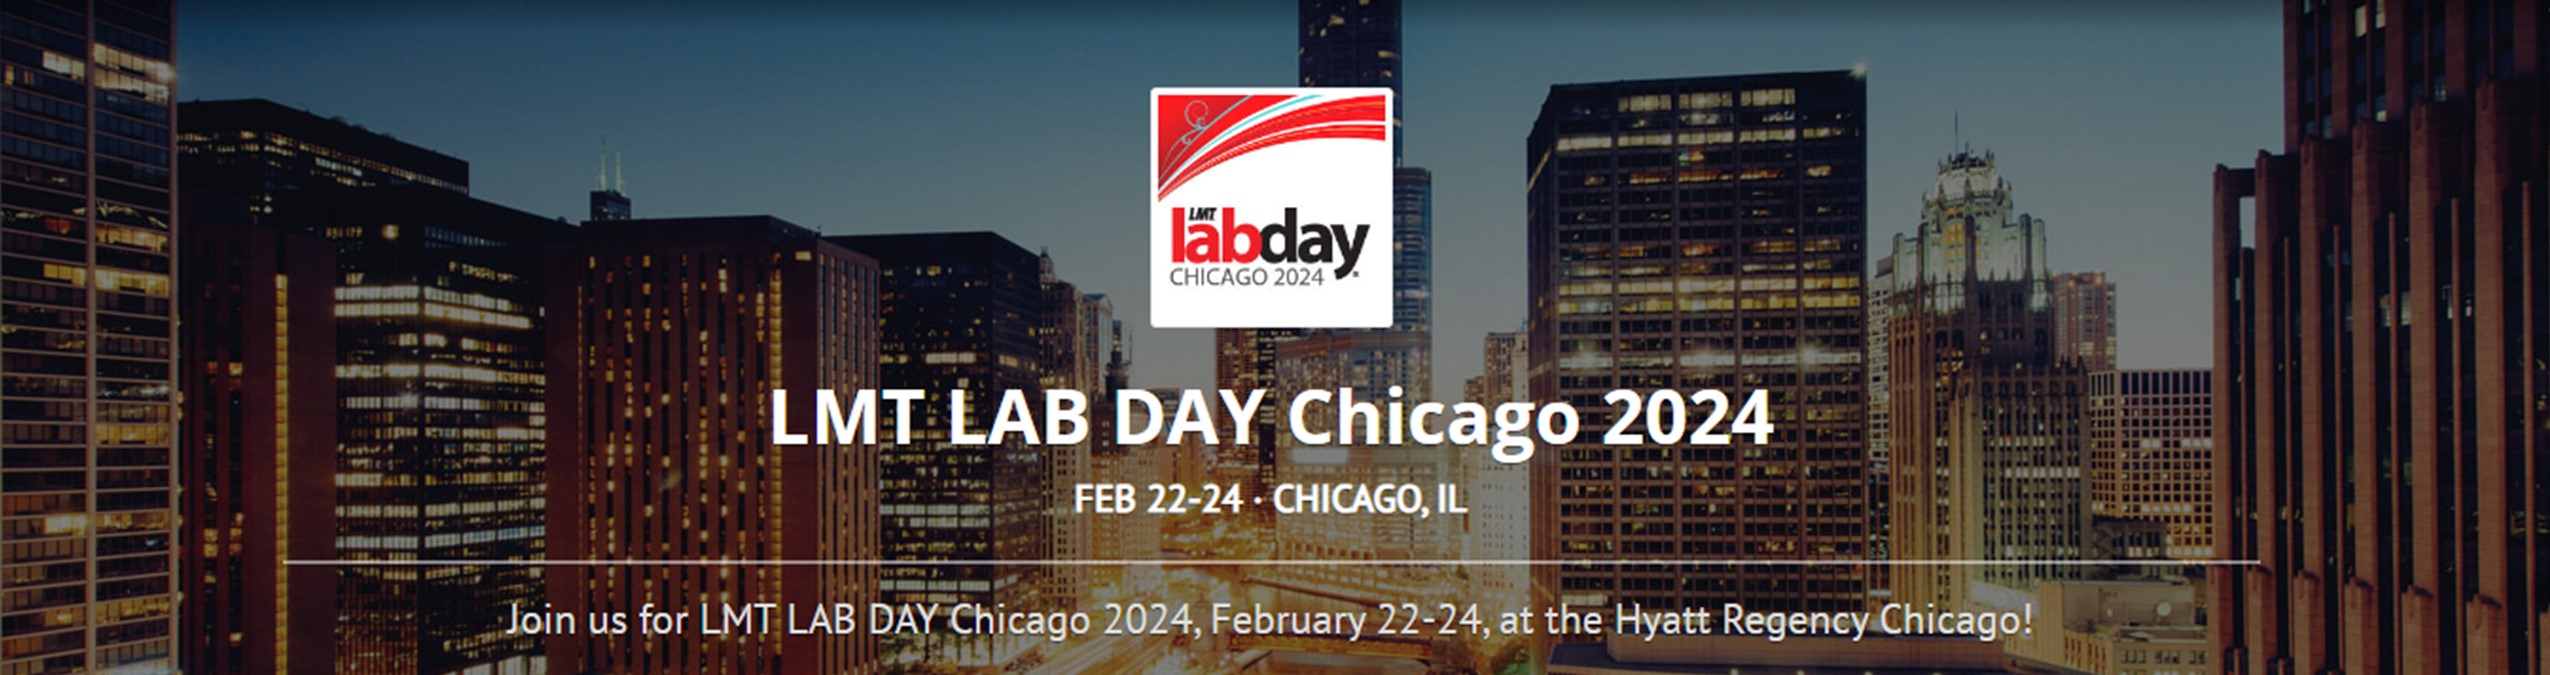 SafeLink Presents a Safety Seminar at Lab Day Chicago 2024